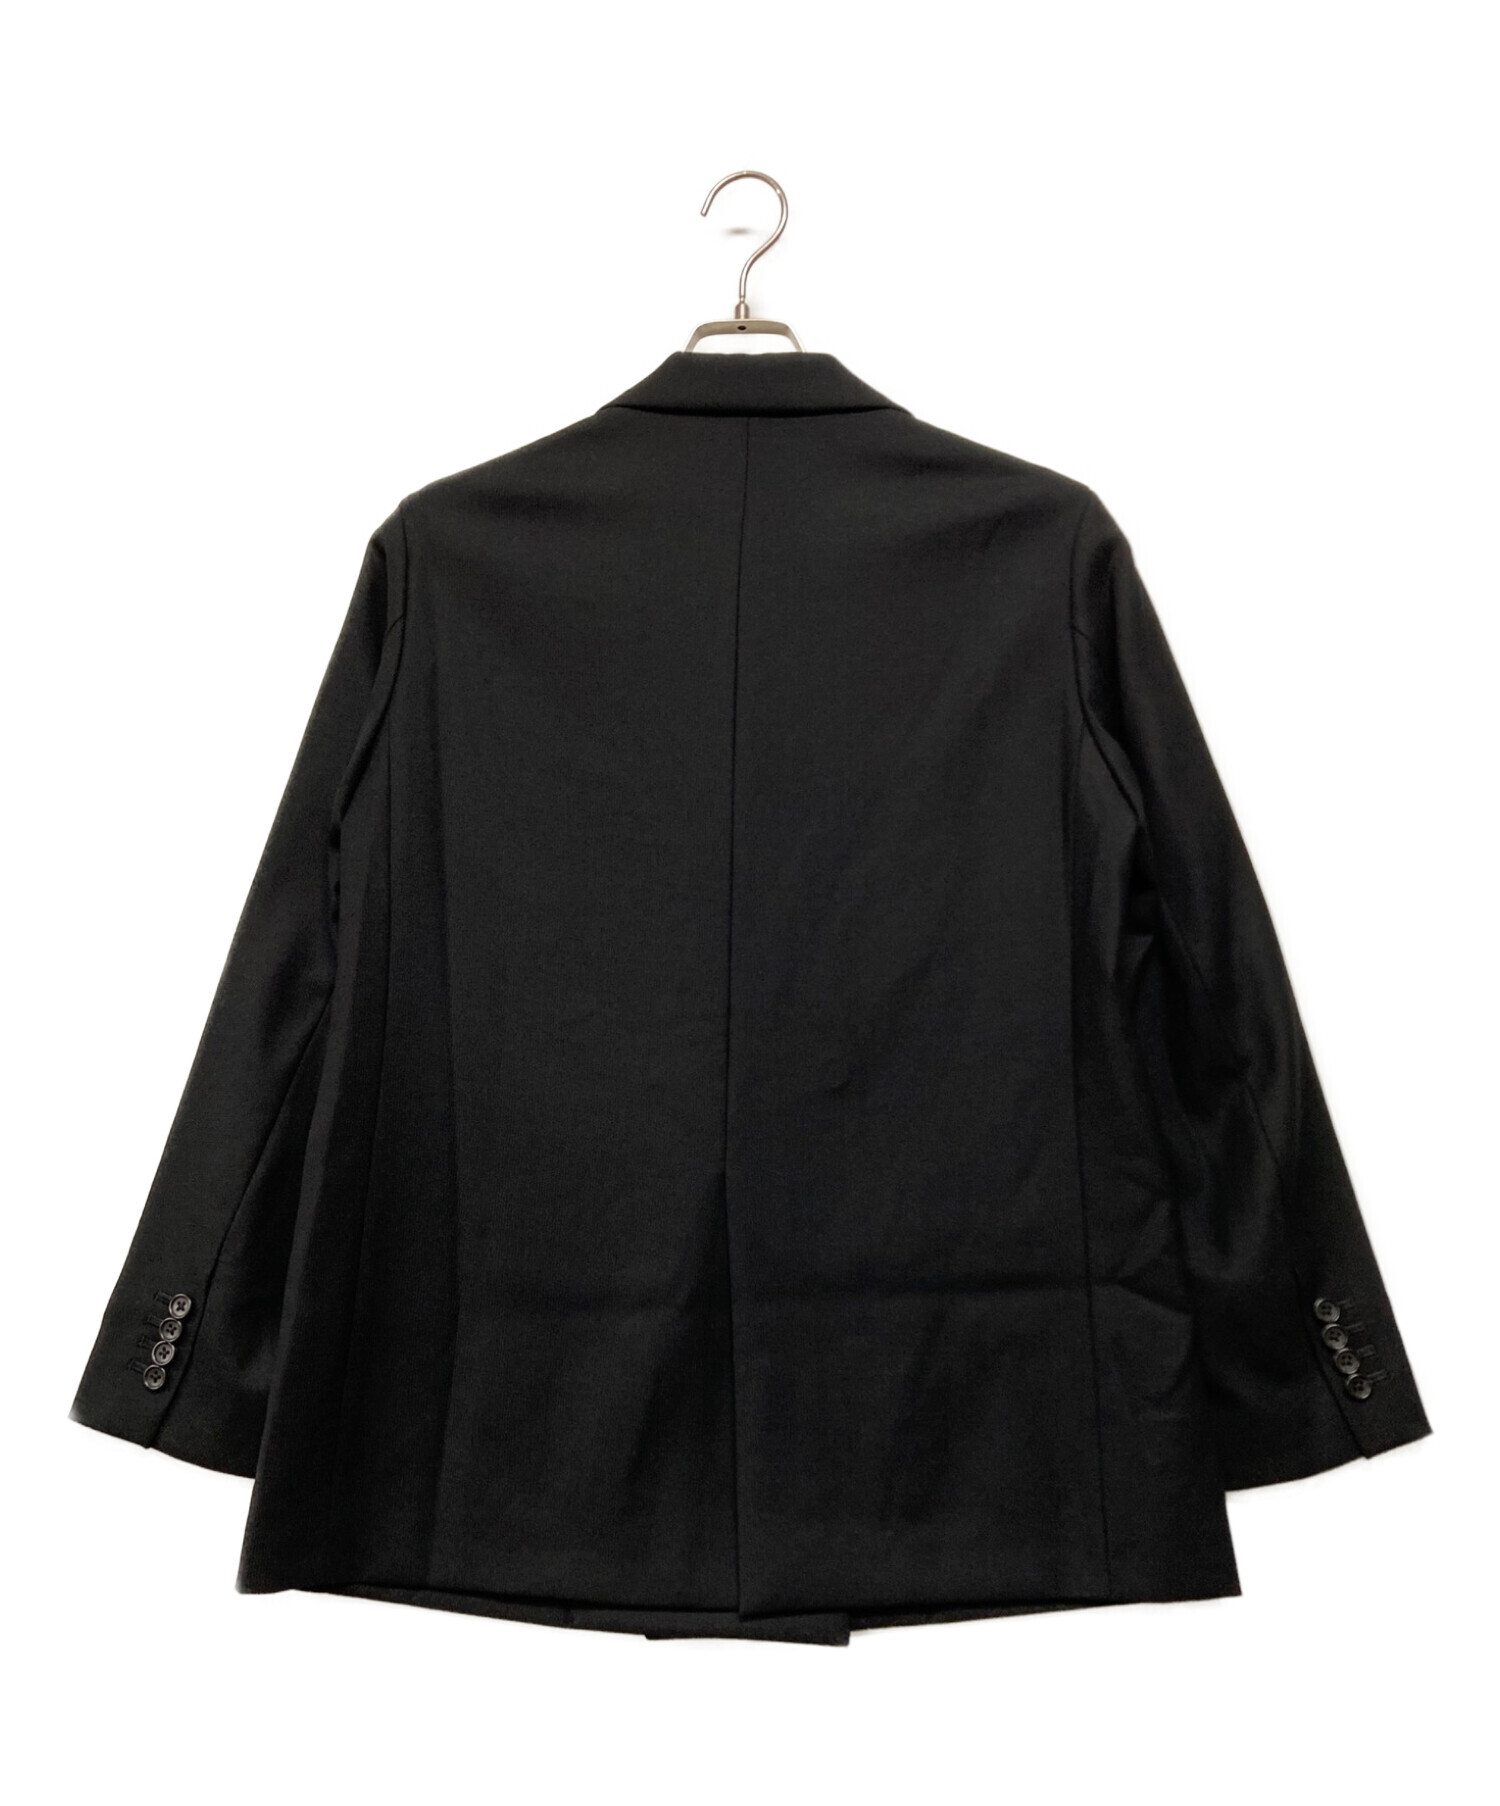 FRAMeWORK (フレームワーク) アーミークロスダブルブレスドジャケット ブラック サイズ:SIZE 38